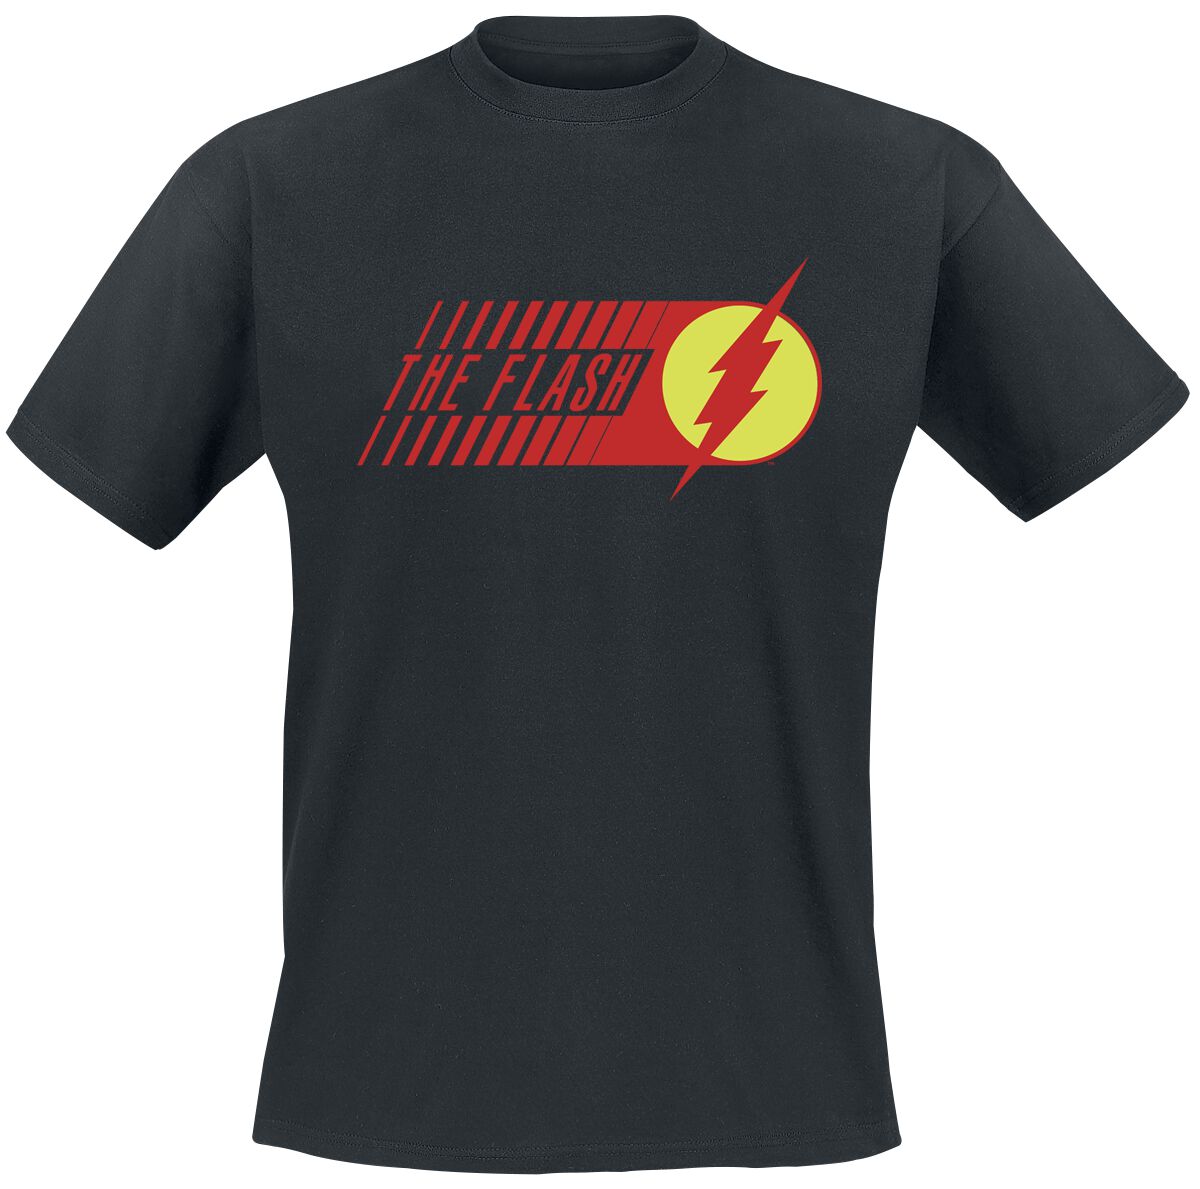 The Flash Flash - Starlabs T-Shirt schwarz in L